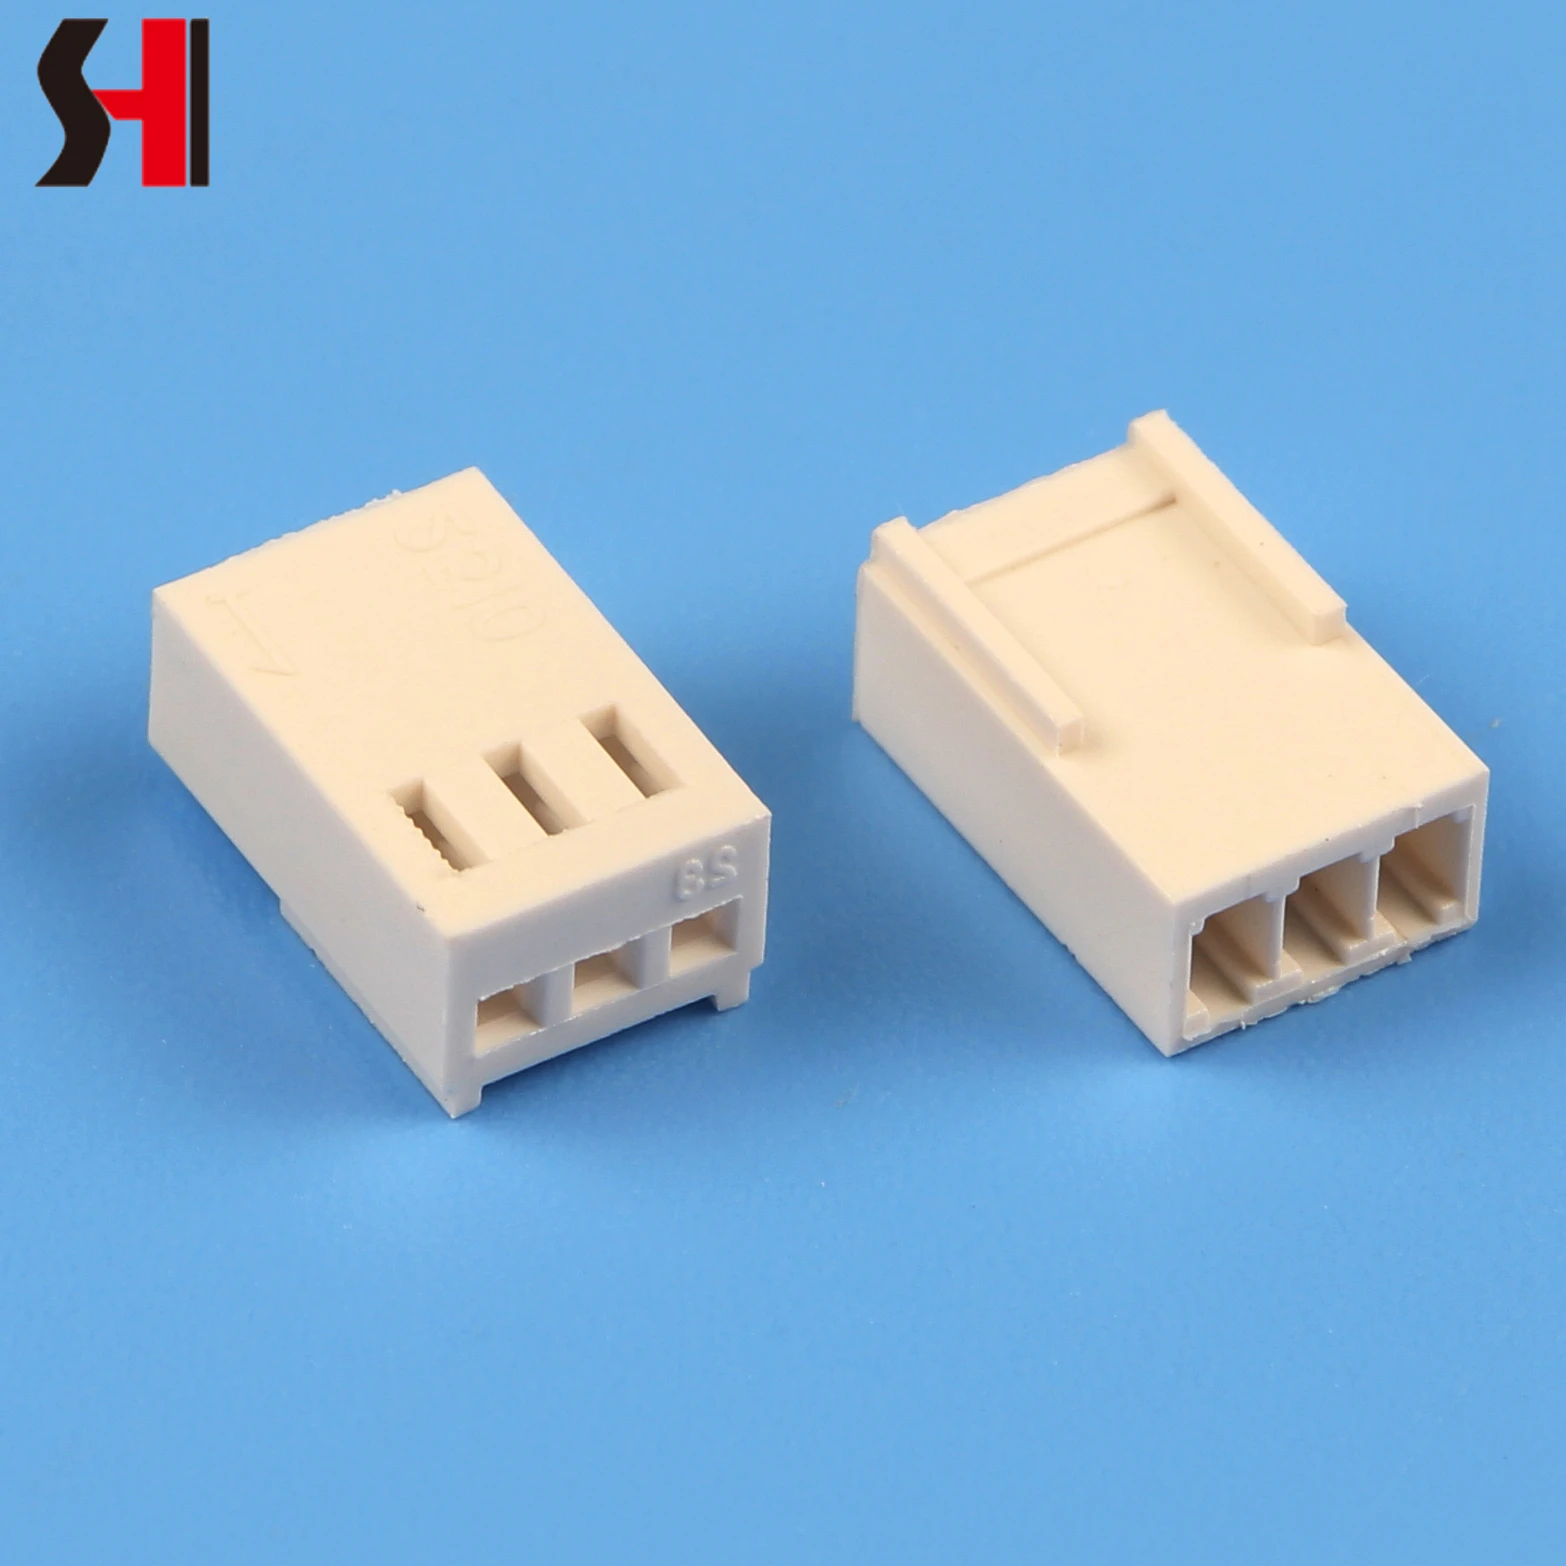 molex 12 pin connector kit